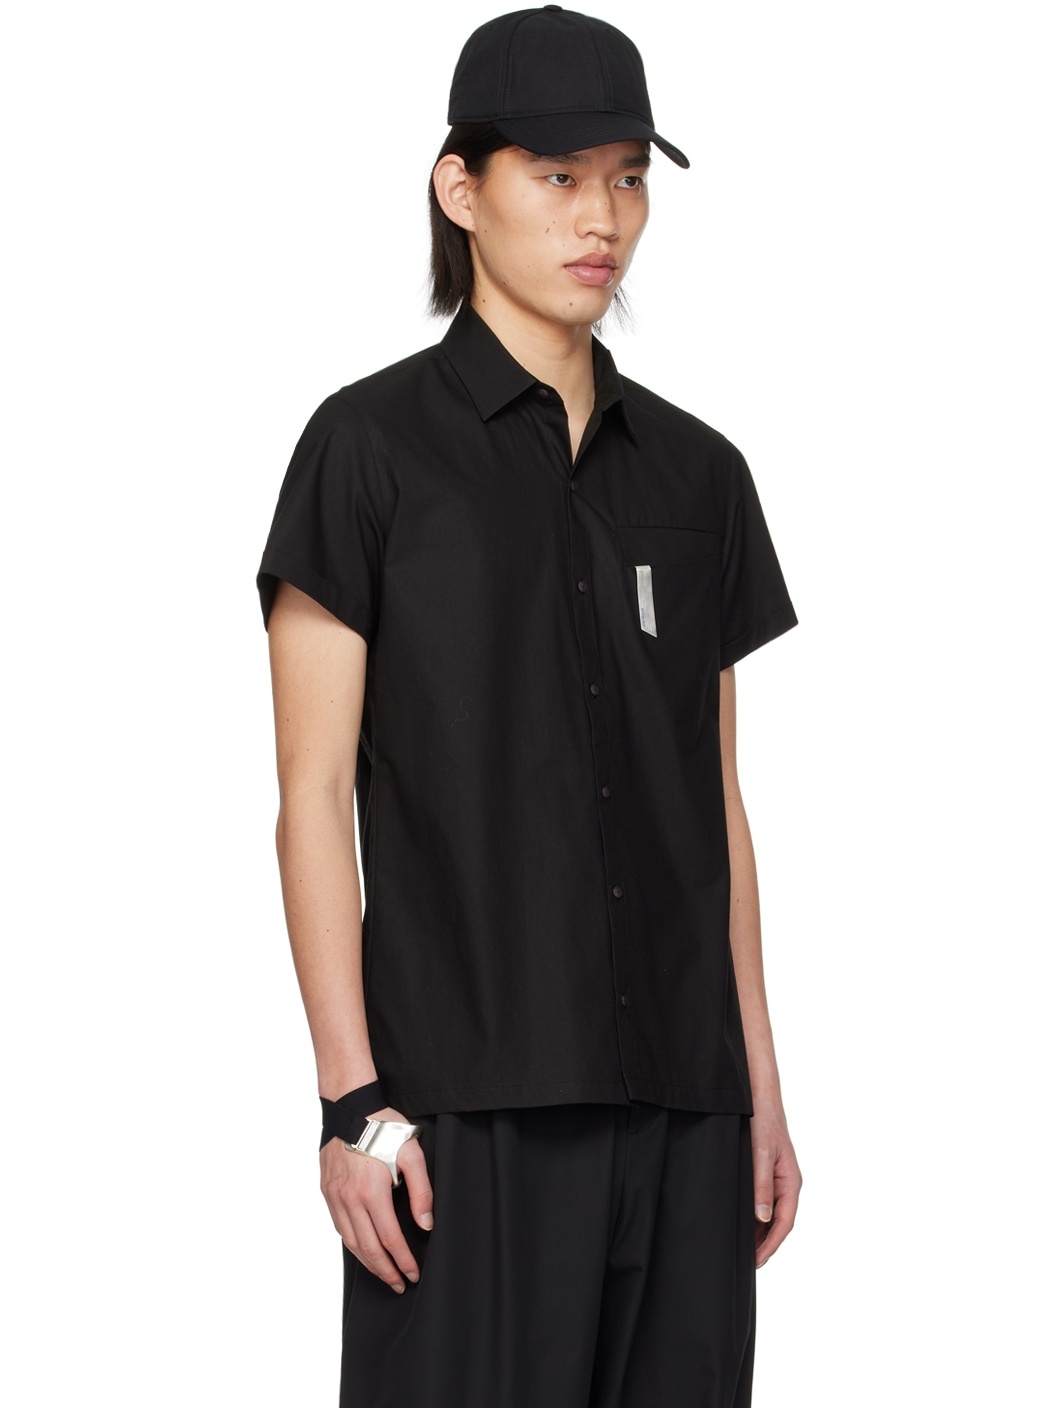 Black Pin Shirt - 2